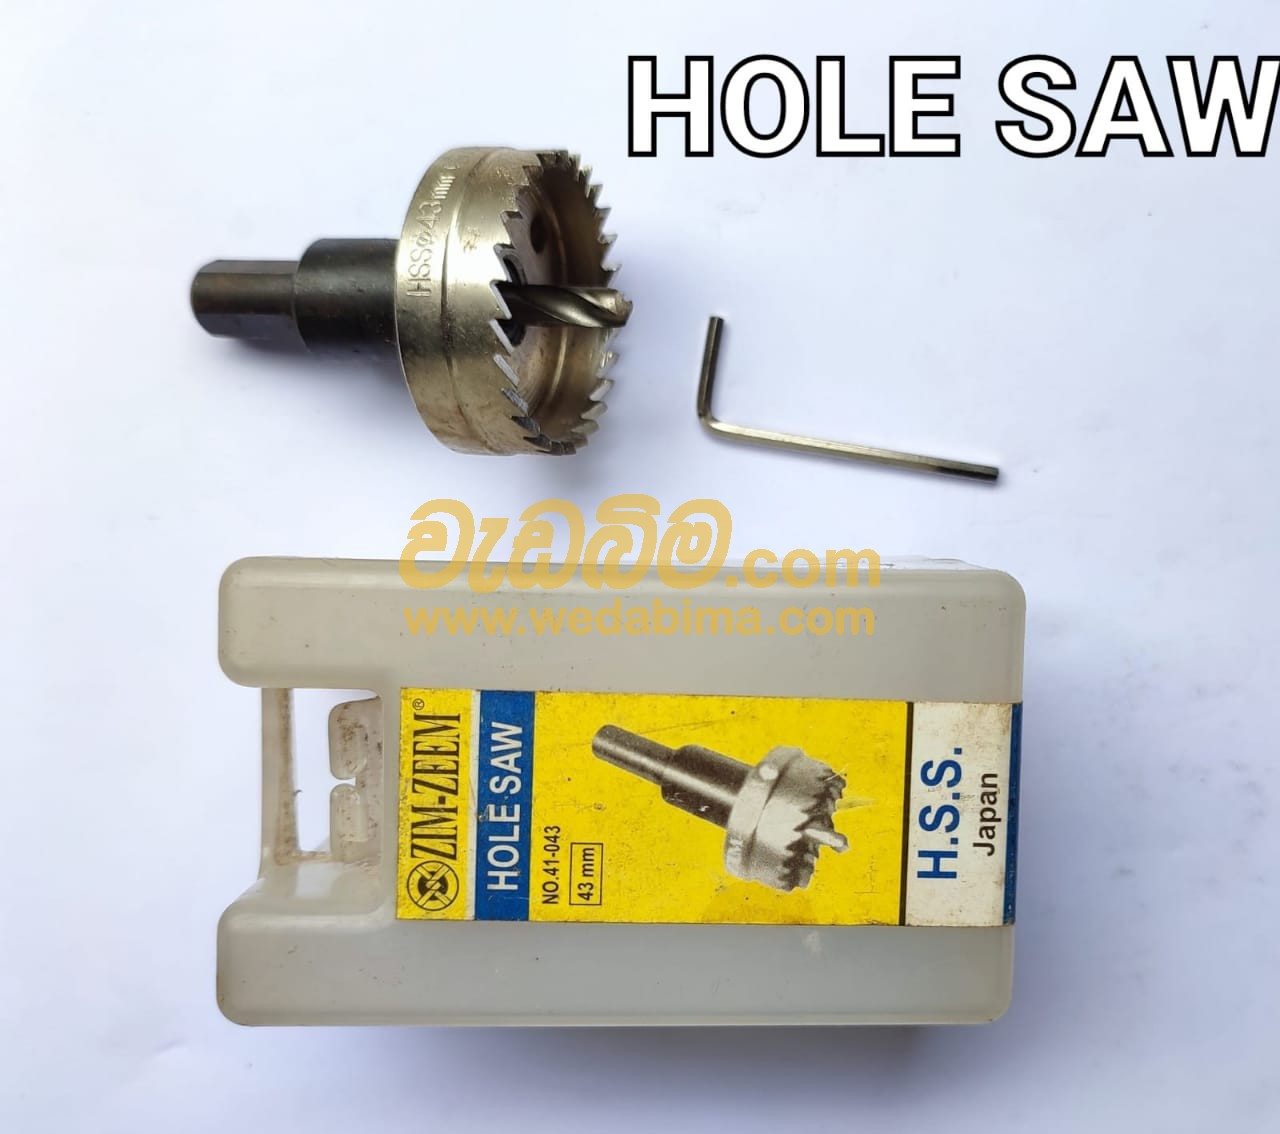 hole saw price